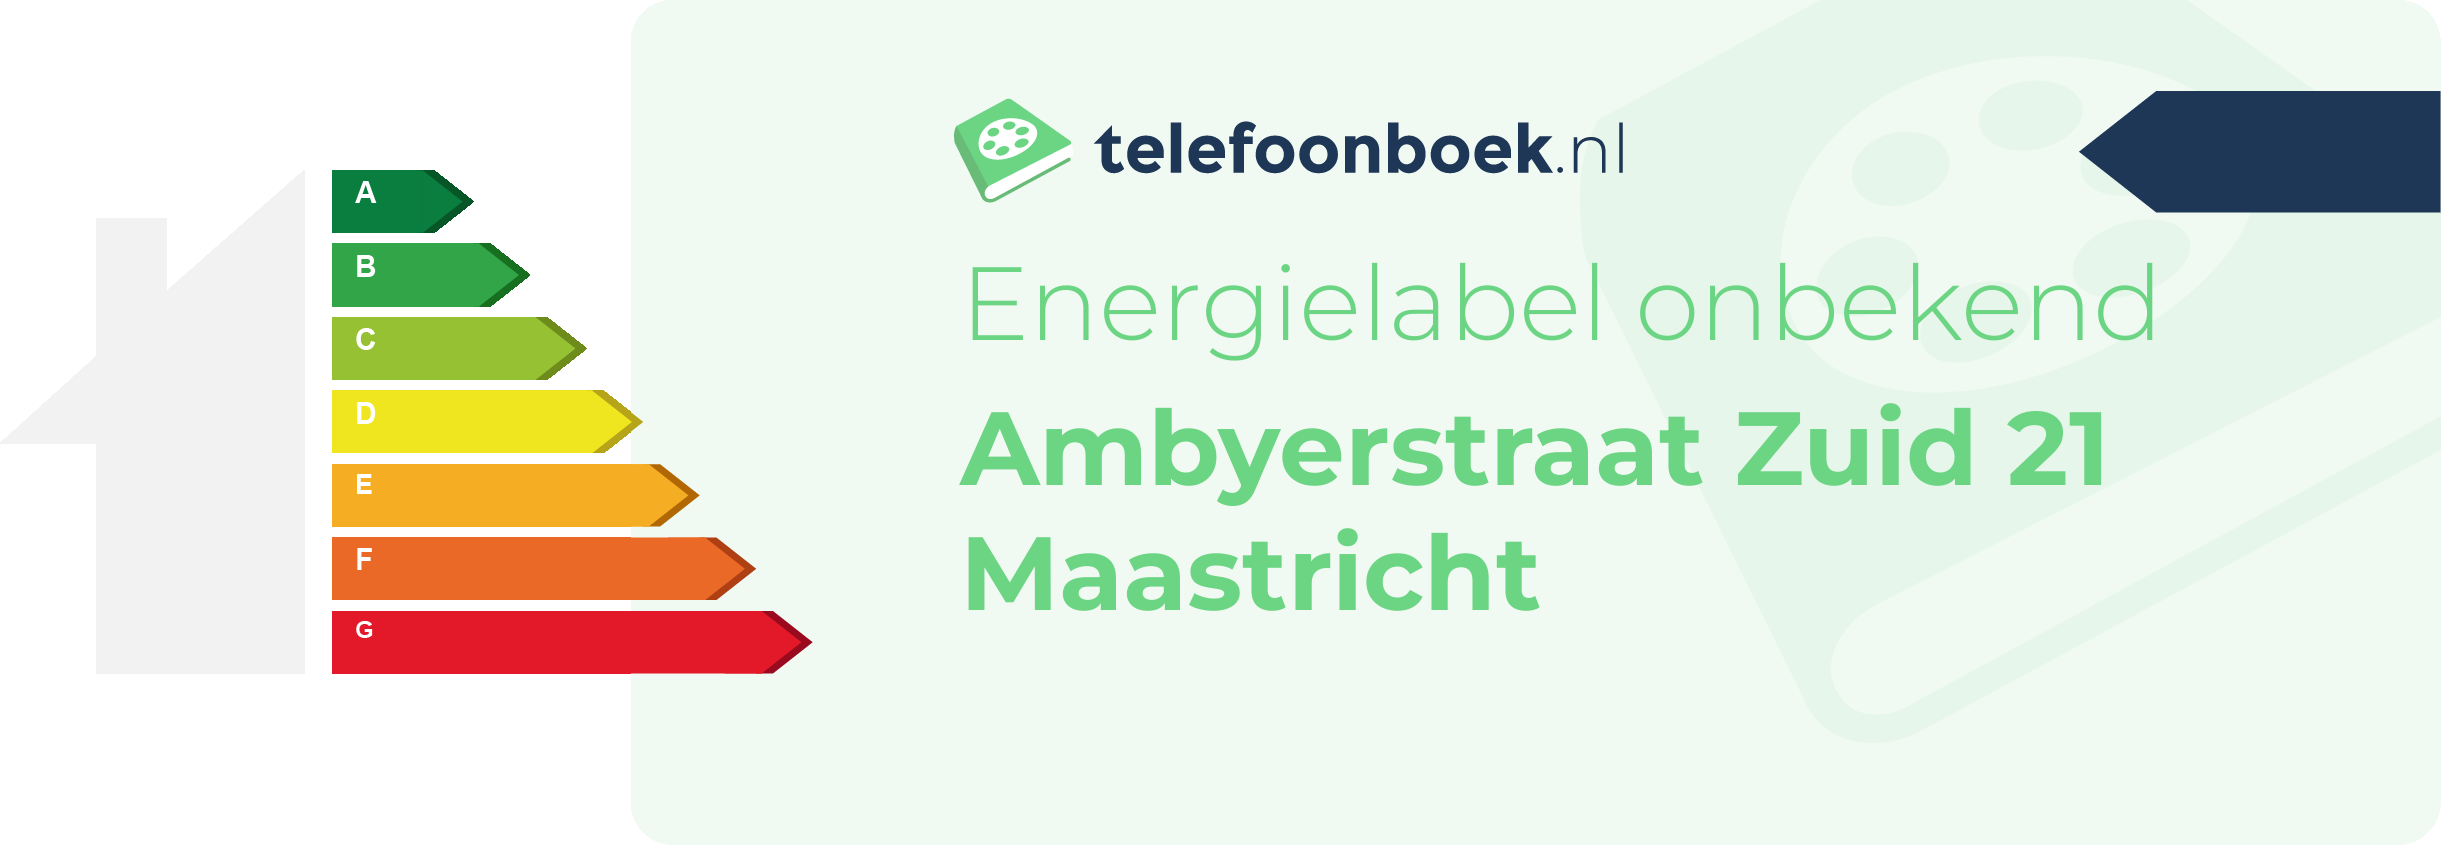 Energielabel Ambyerstraat Zuid 21 Maastricht